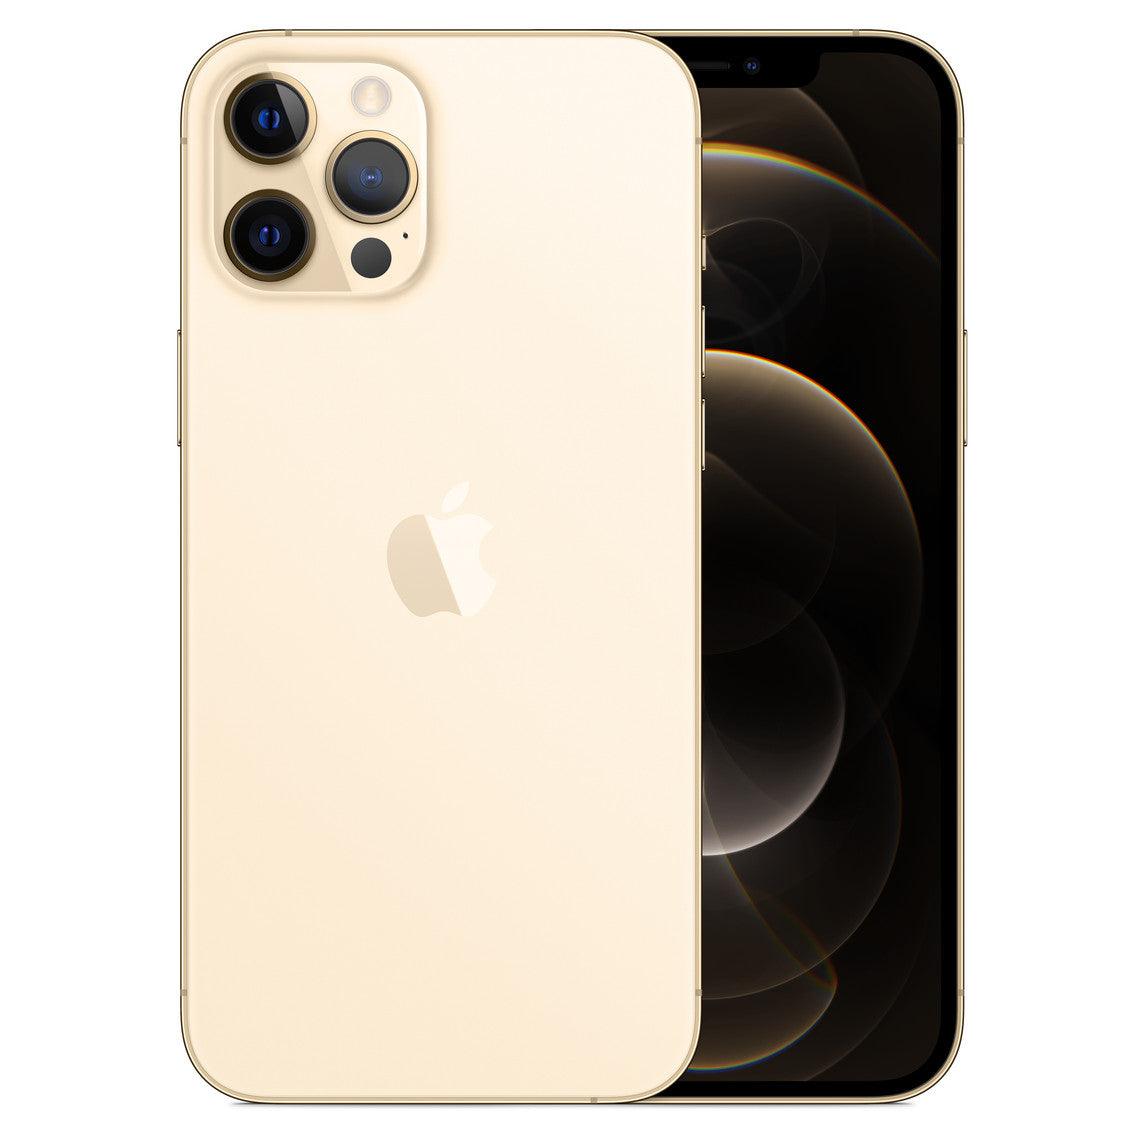 Apple iPhone 12 Pro Max 128GB Unlocked